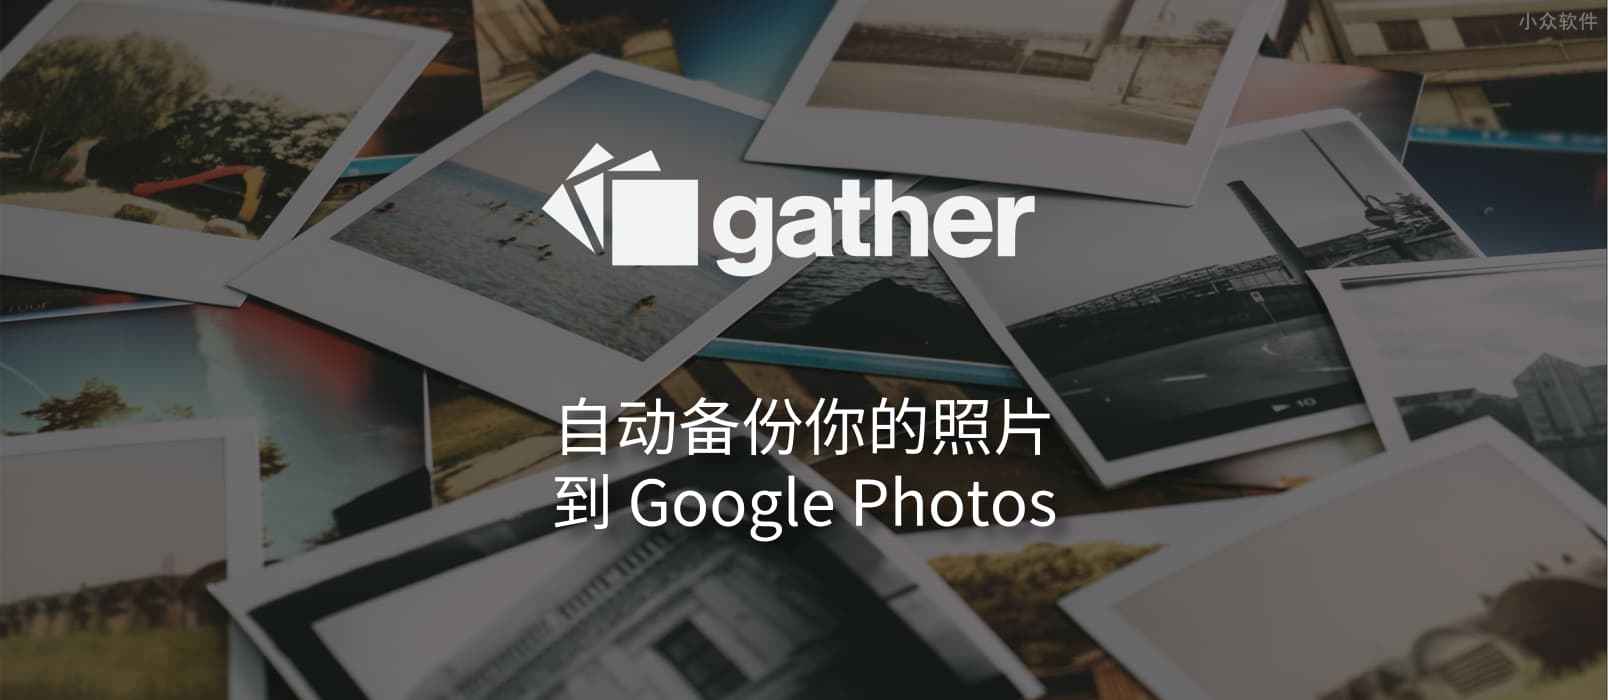 Gather - 将散落在 Dropbox, Instagram, Facebook 的图片备份至 Google Photos [Web] 1